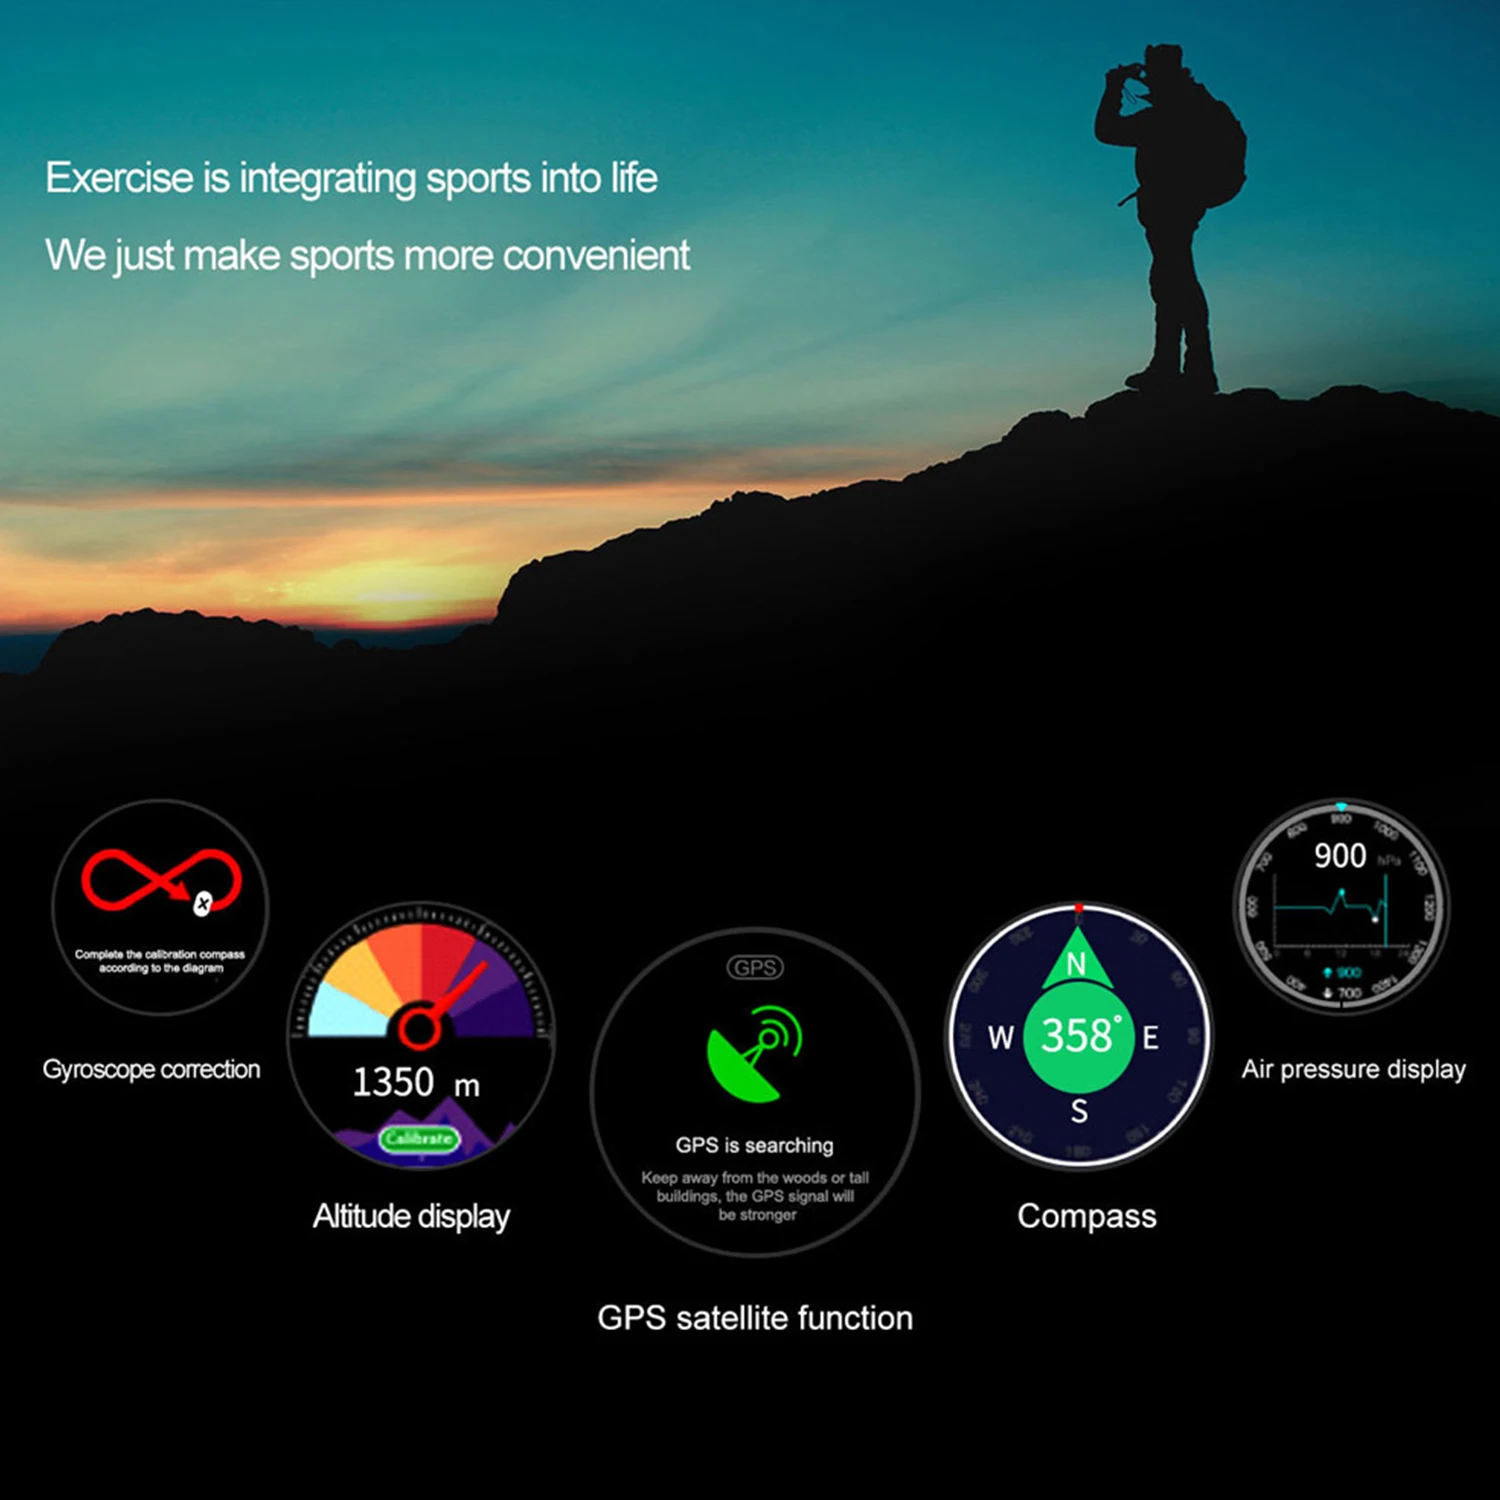 LOKMAT Смарт-часы для мужчин BT3.0+ 4,0 Водонепроницаемый Шагомер пульсометр Удаленная камера gps спортивные Смарт-часы для Android 4,4/iOS 8,0